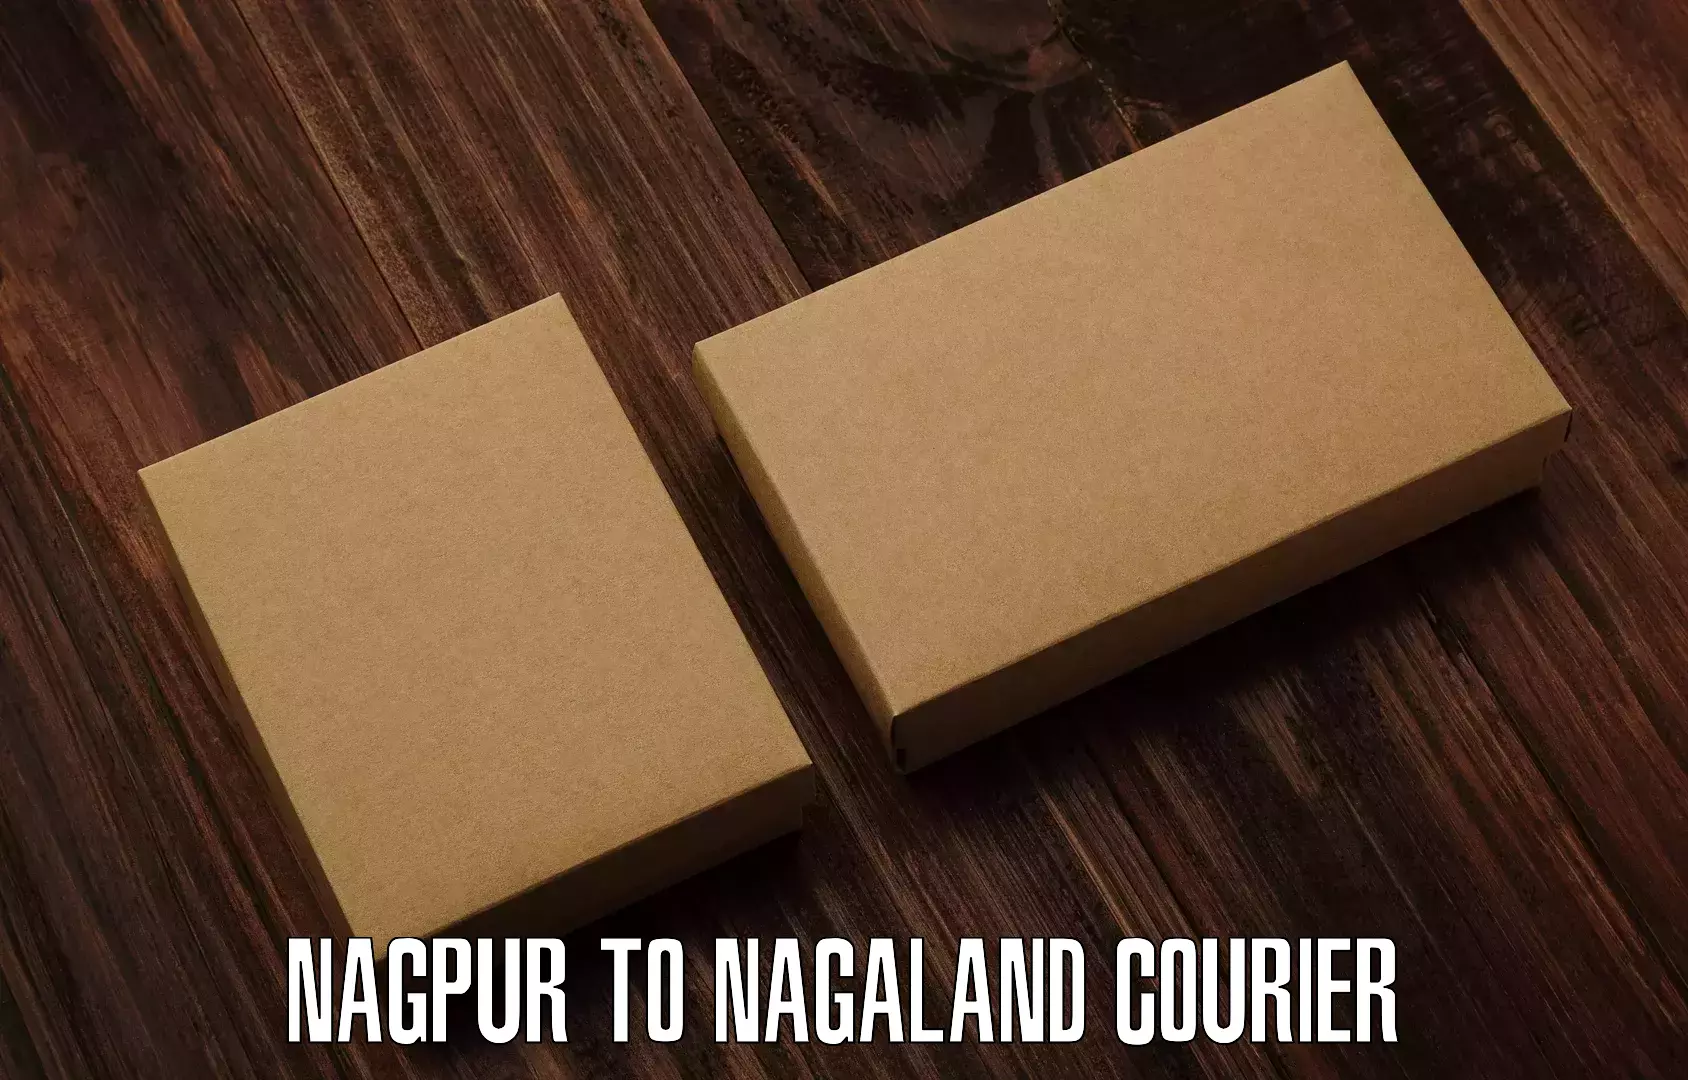 International courier networks Nagpur to Nagaland